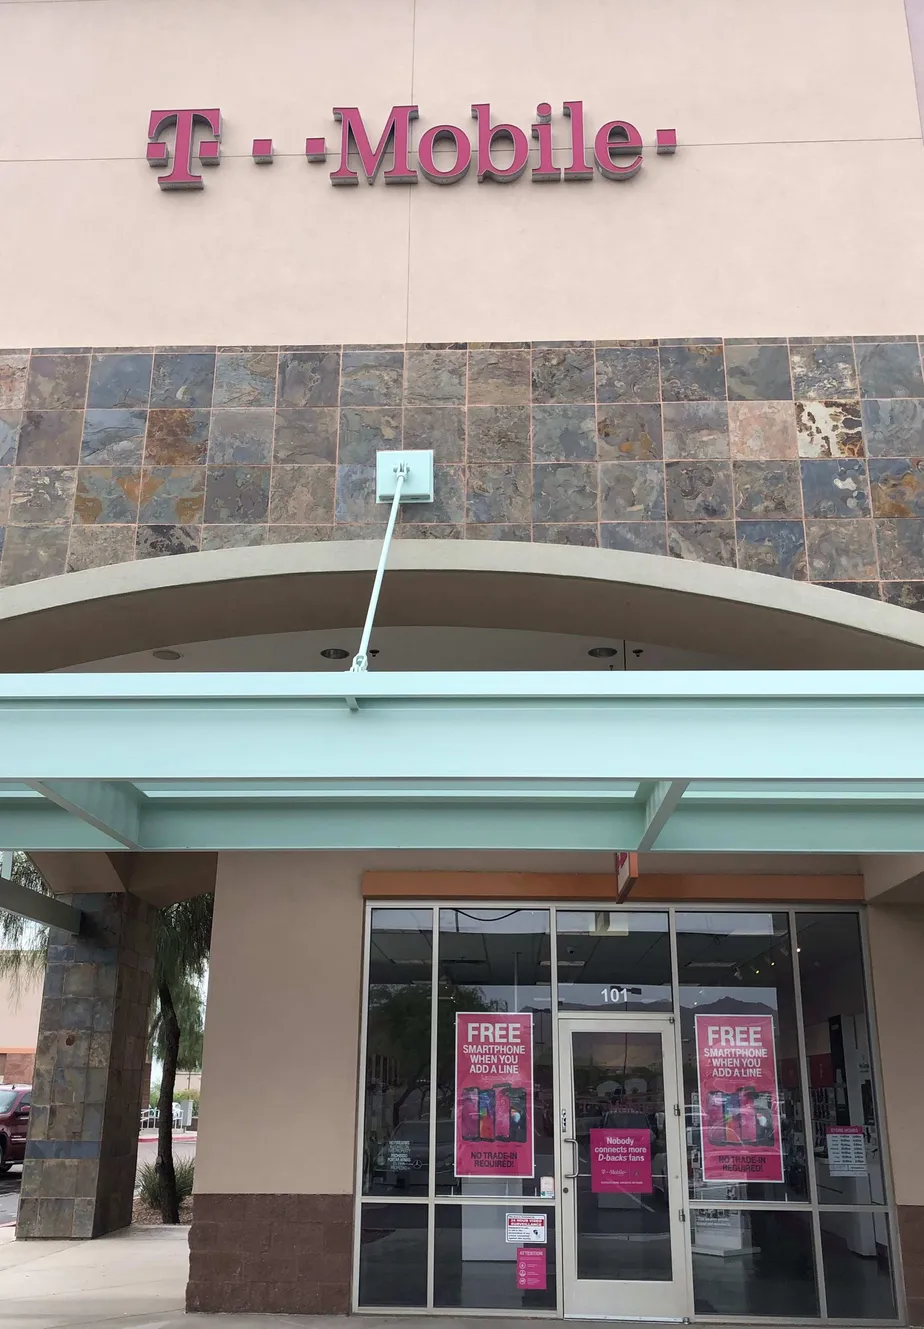 Foto del exterior de la tienda T-Mobile en I10 & Watson, Buckeye, AZ